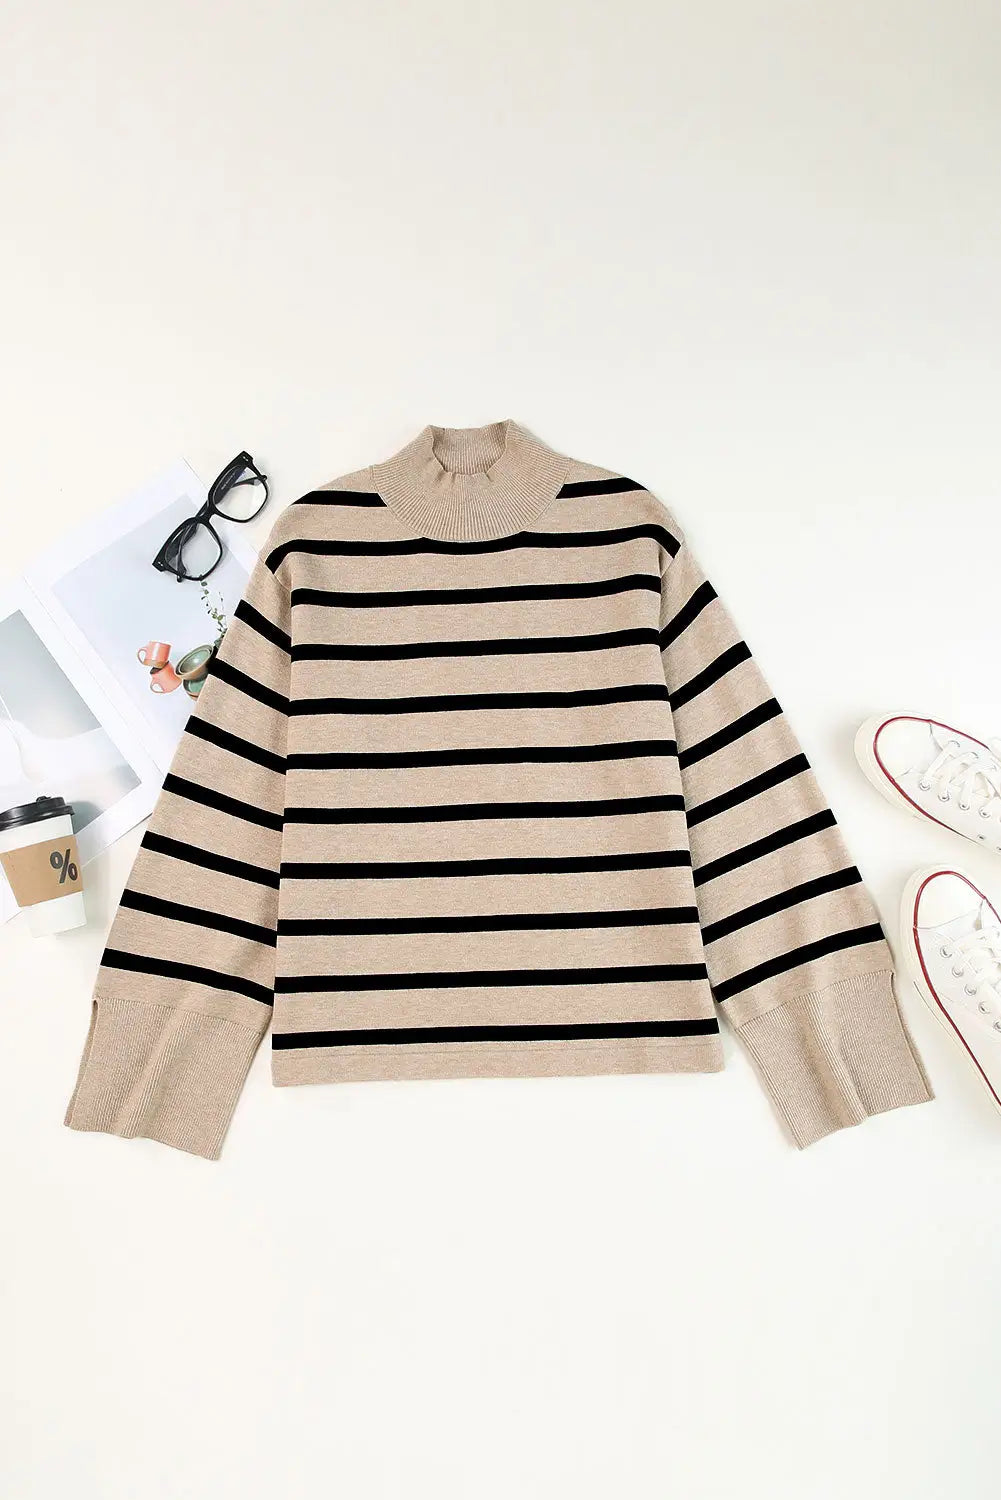 Khaki striped mock neck bell sleeve knit sweater - sweaters & cardigans